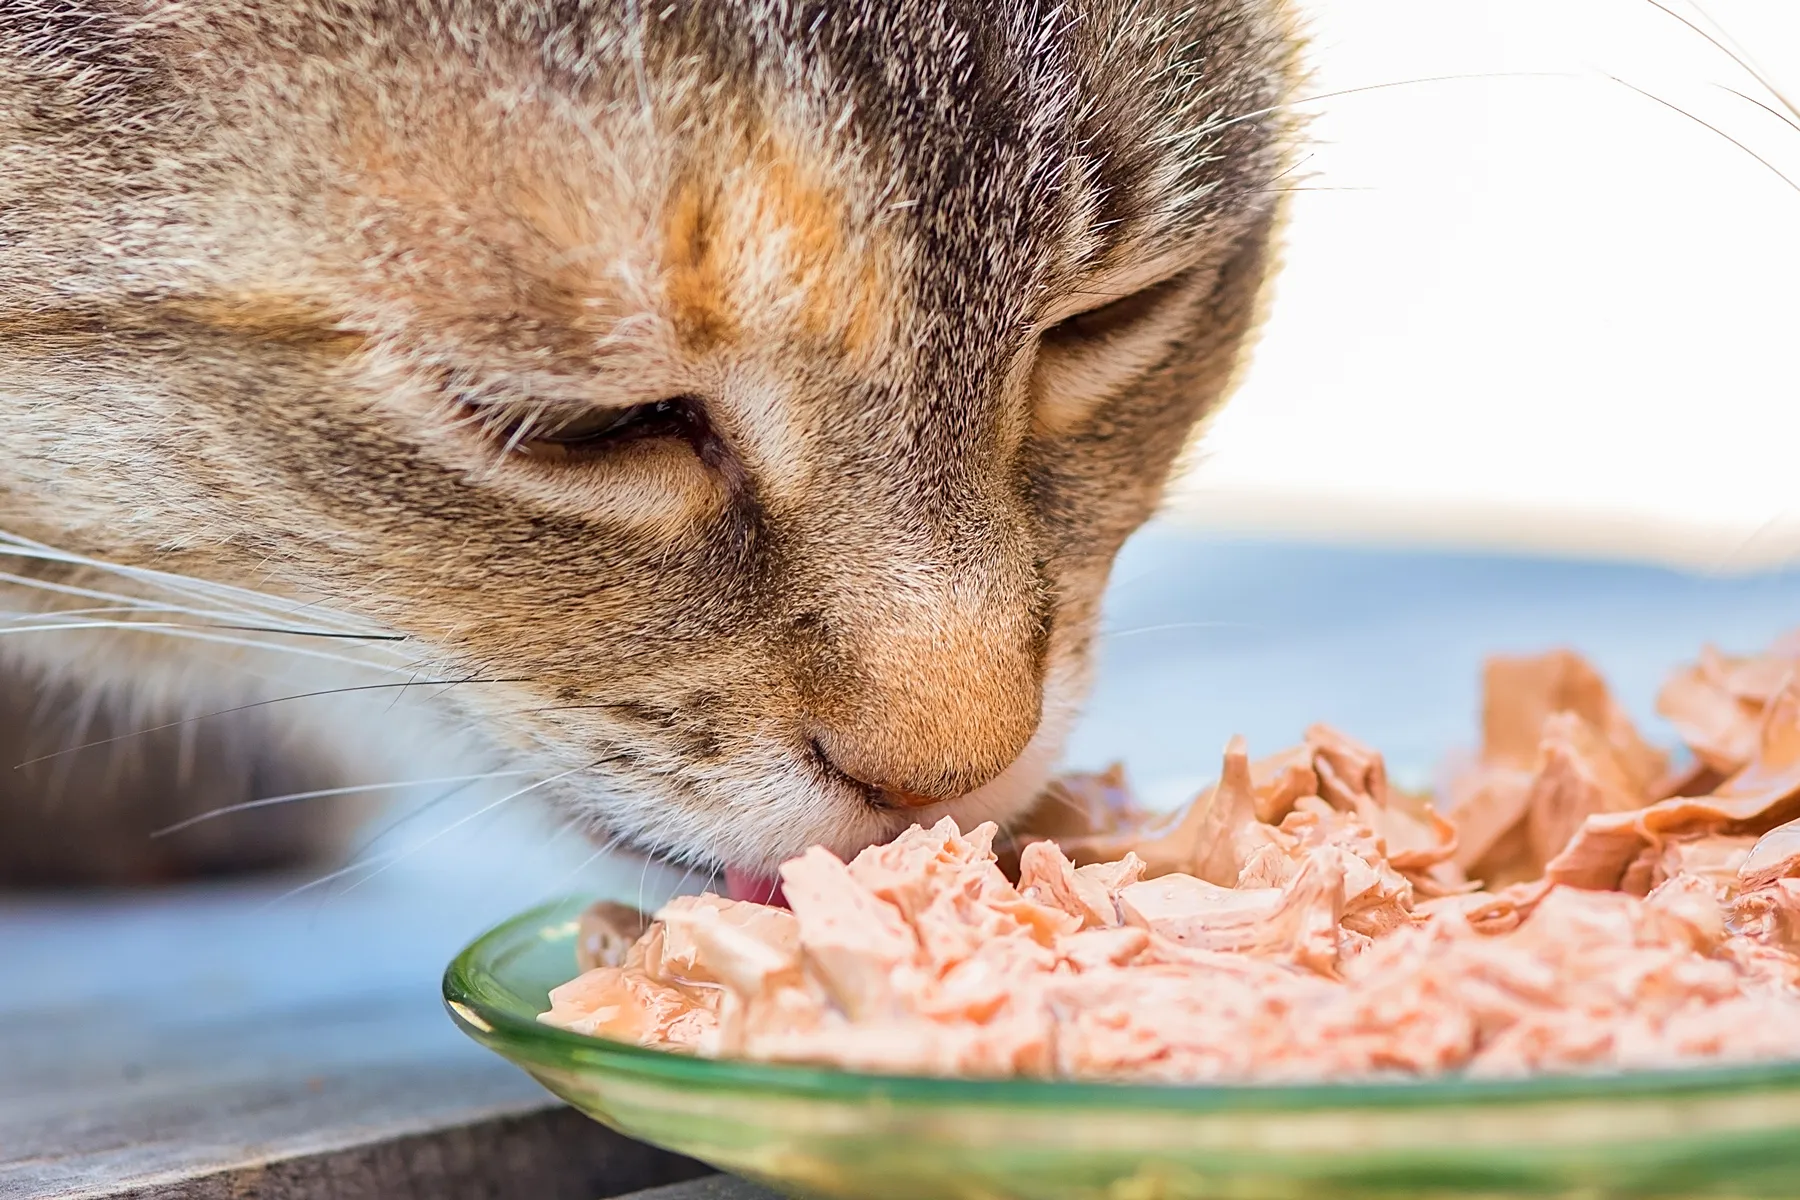 Science Diet Cat Food Feeding Chart